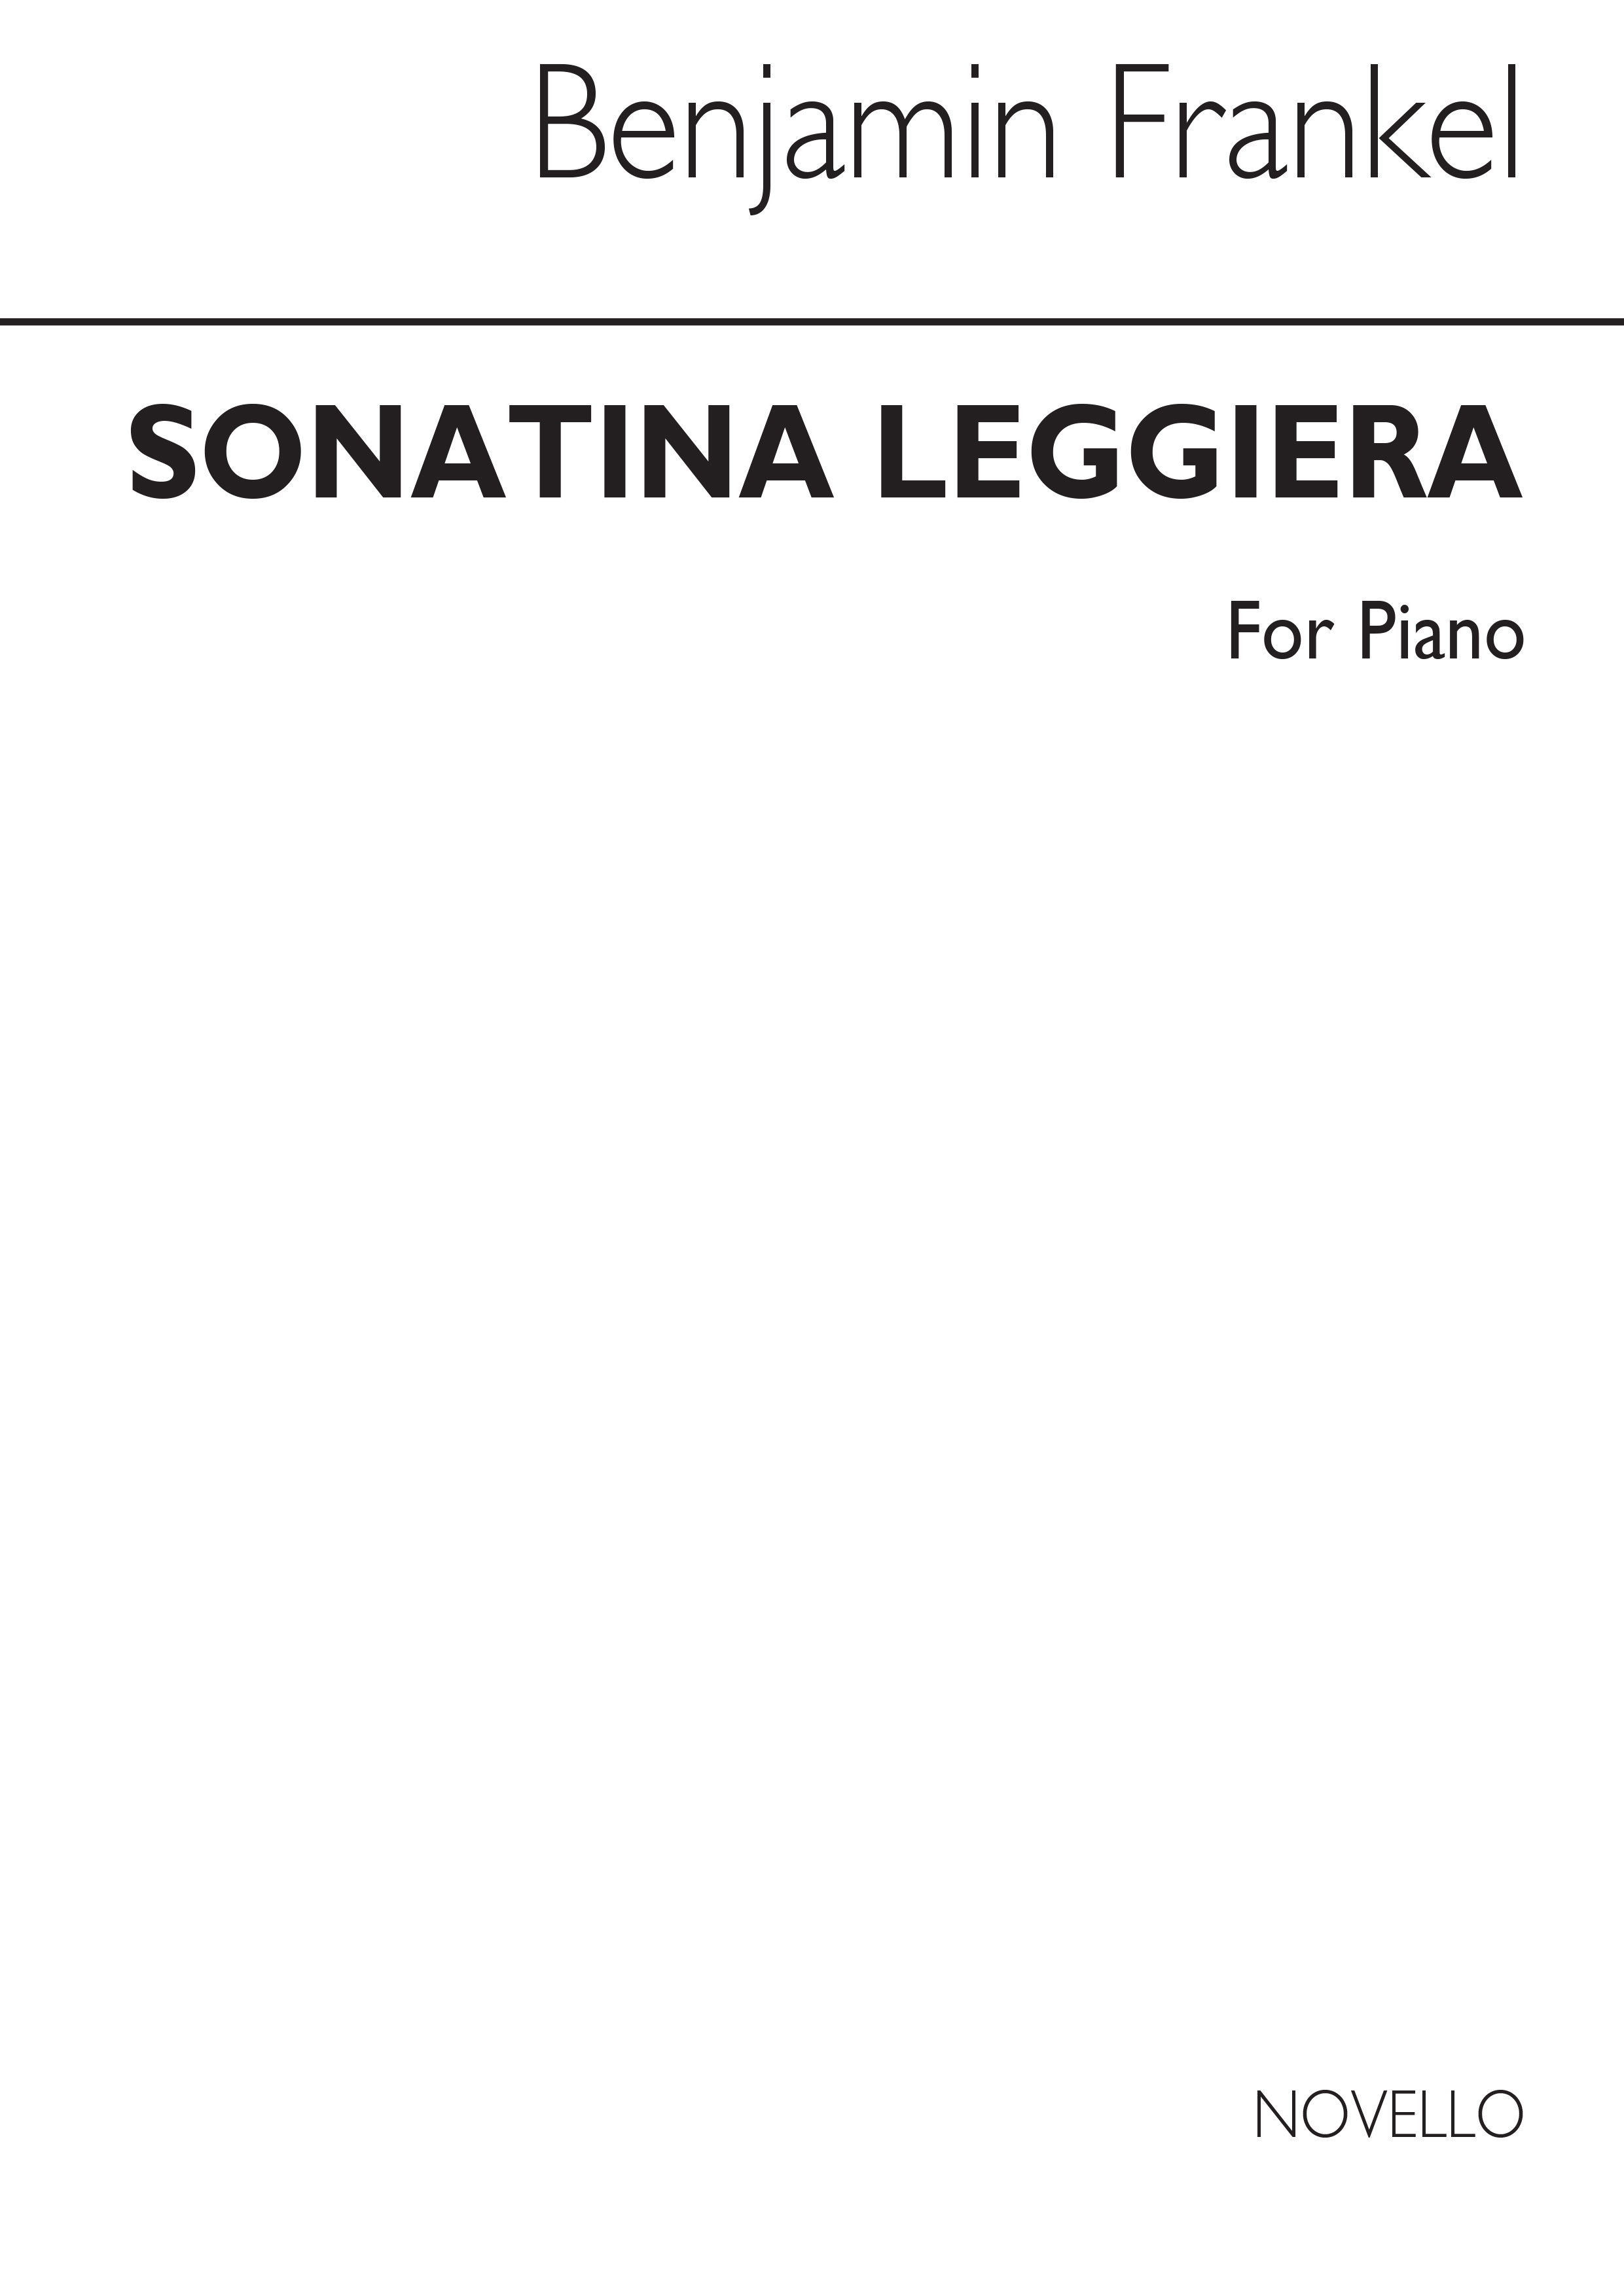 Frankel: Sonatina Leggiera for Piano